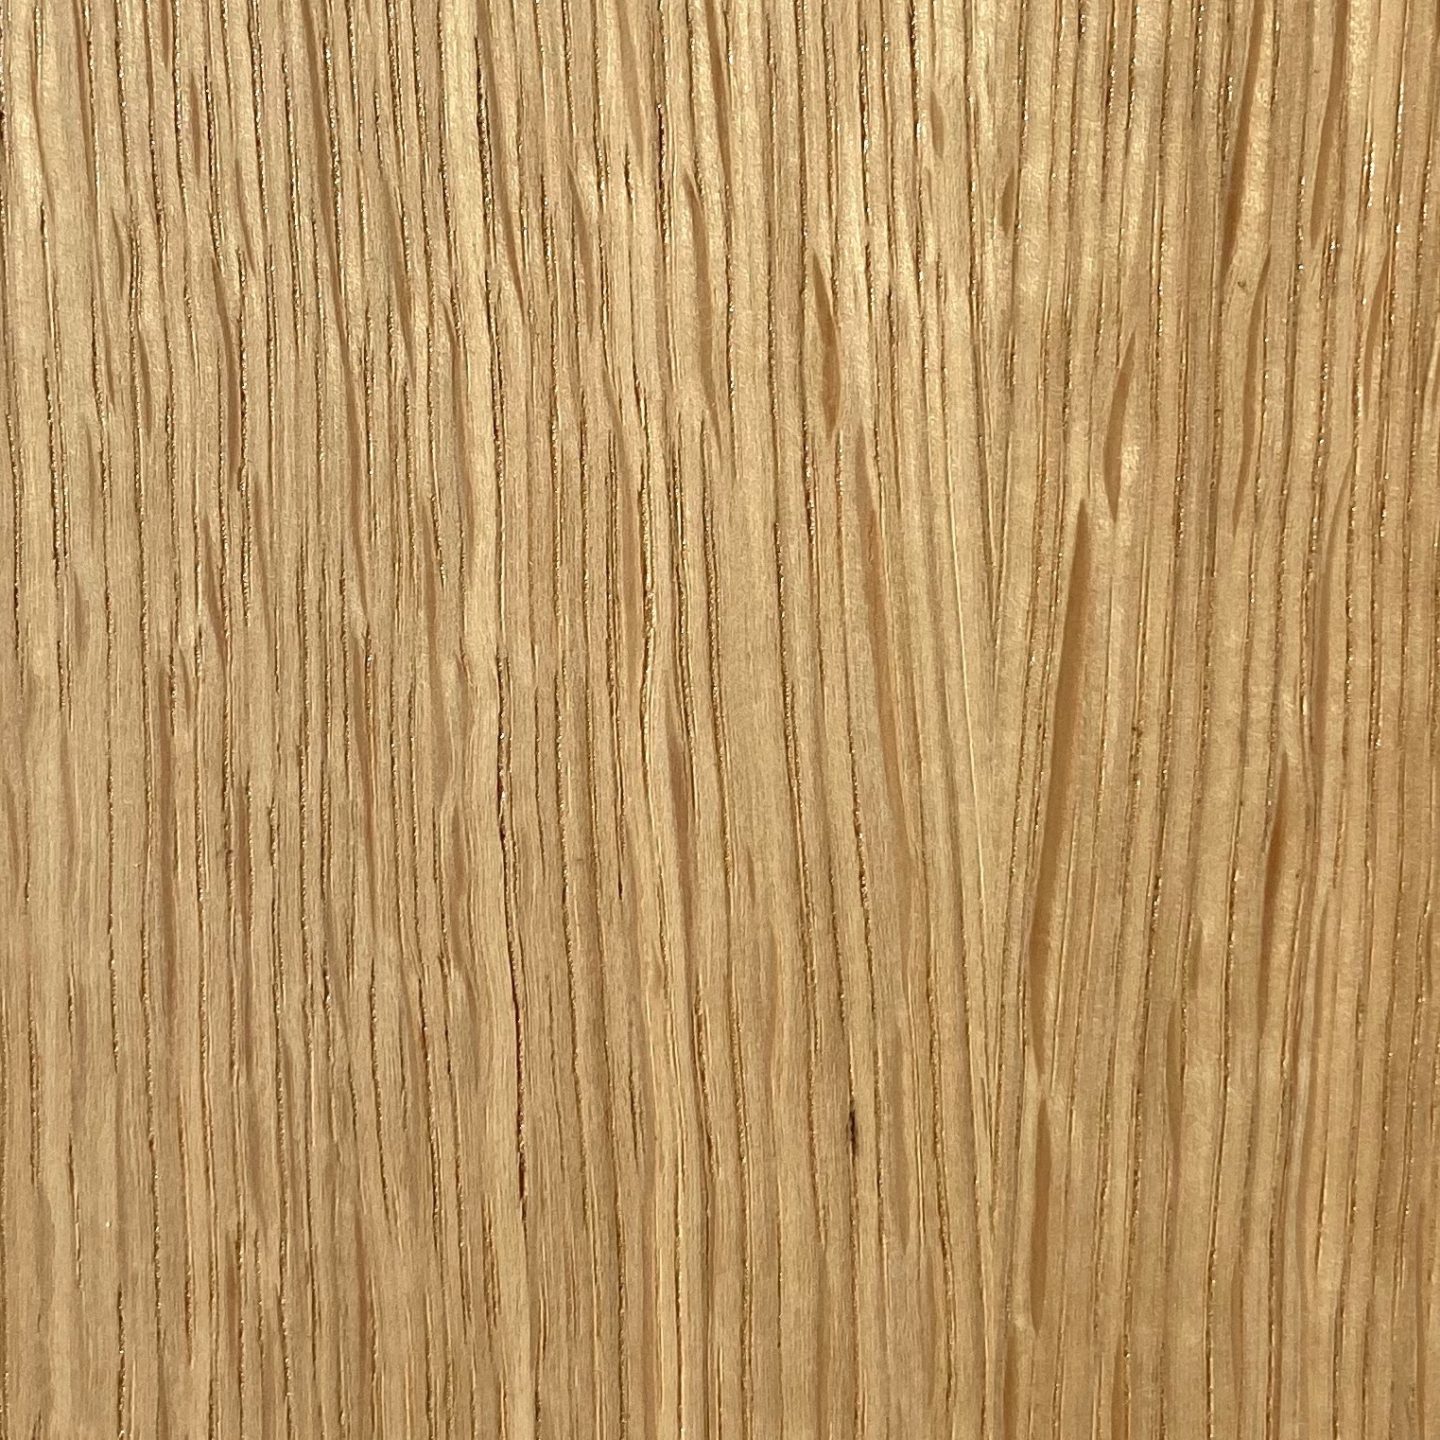 oak solid & veneer natural